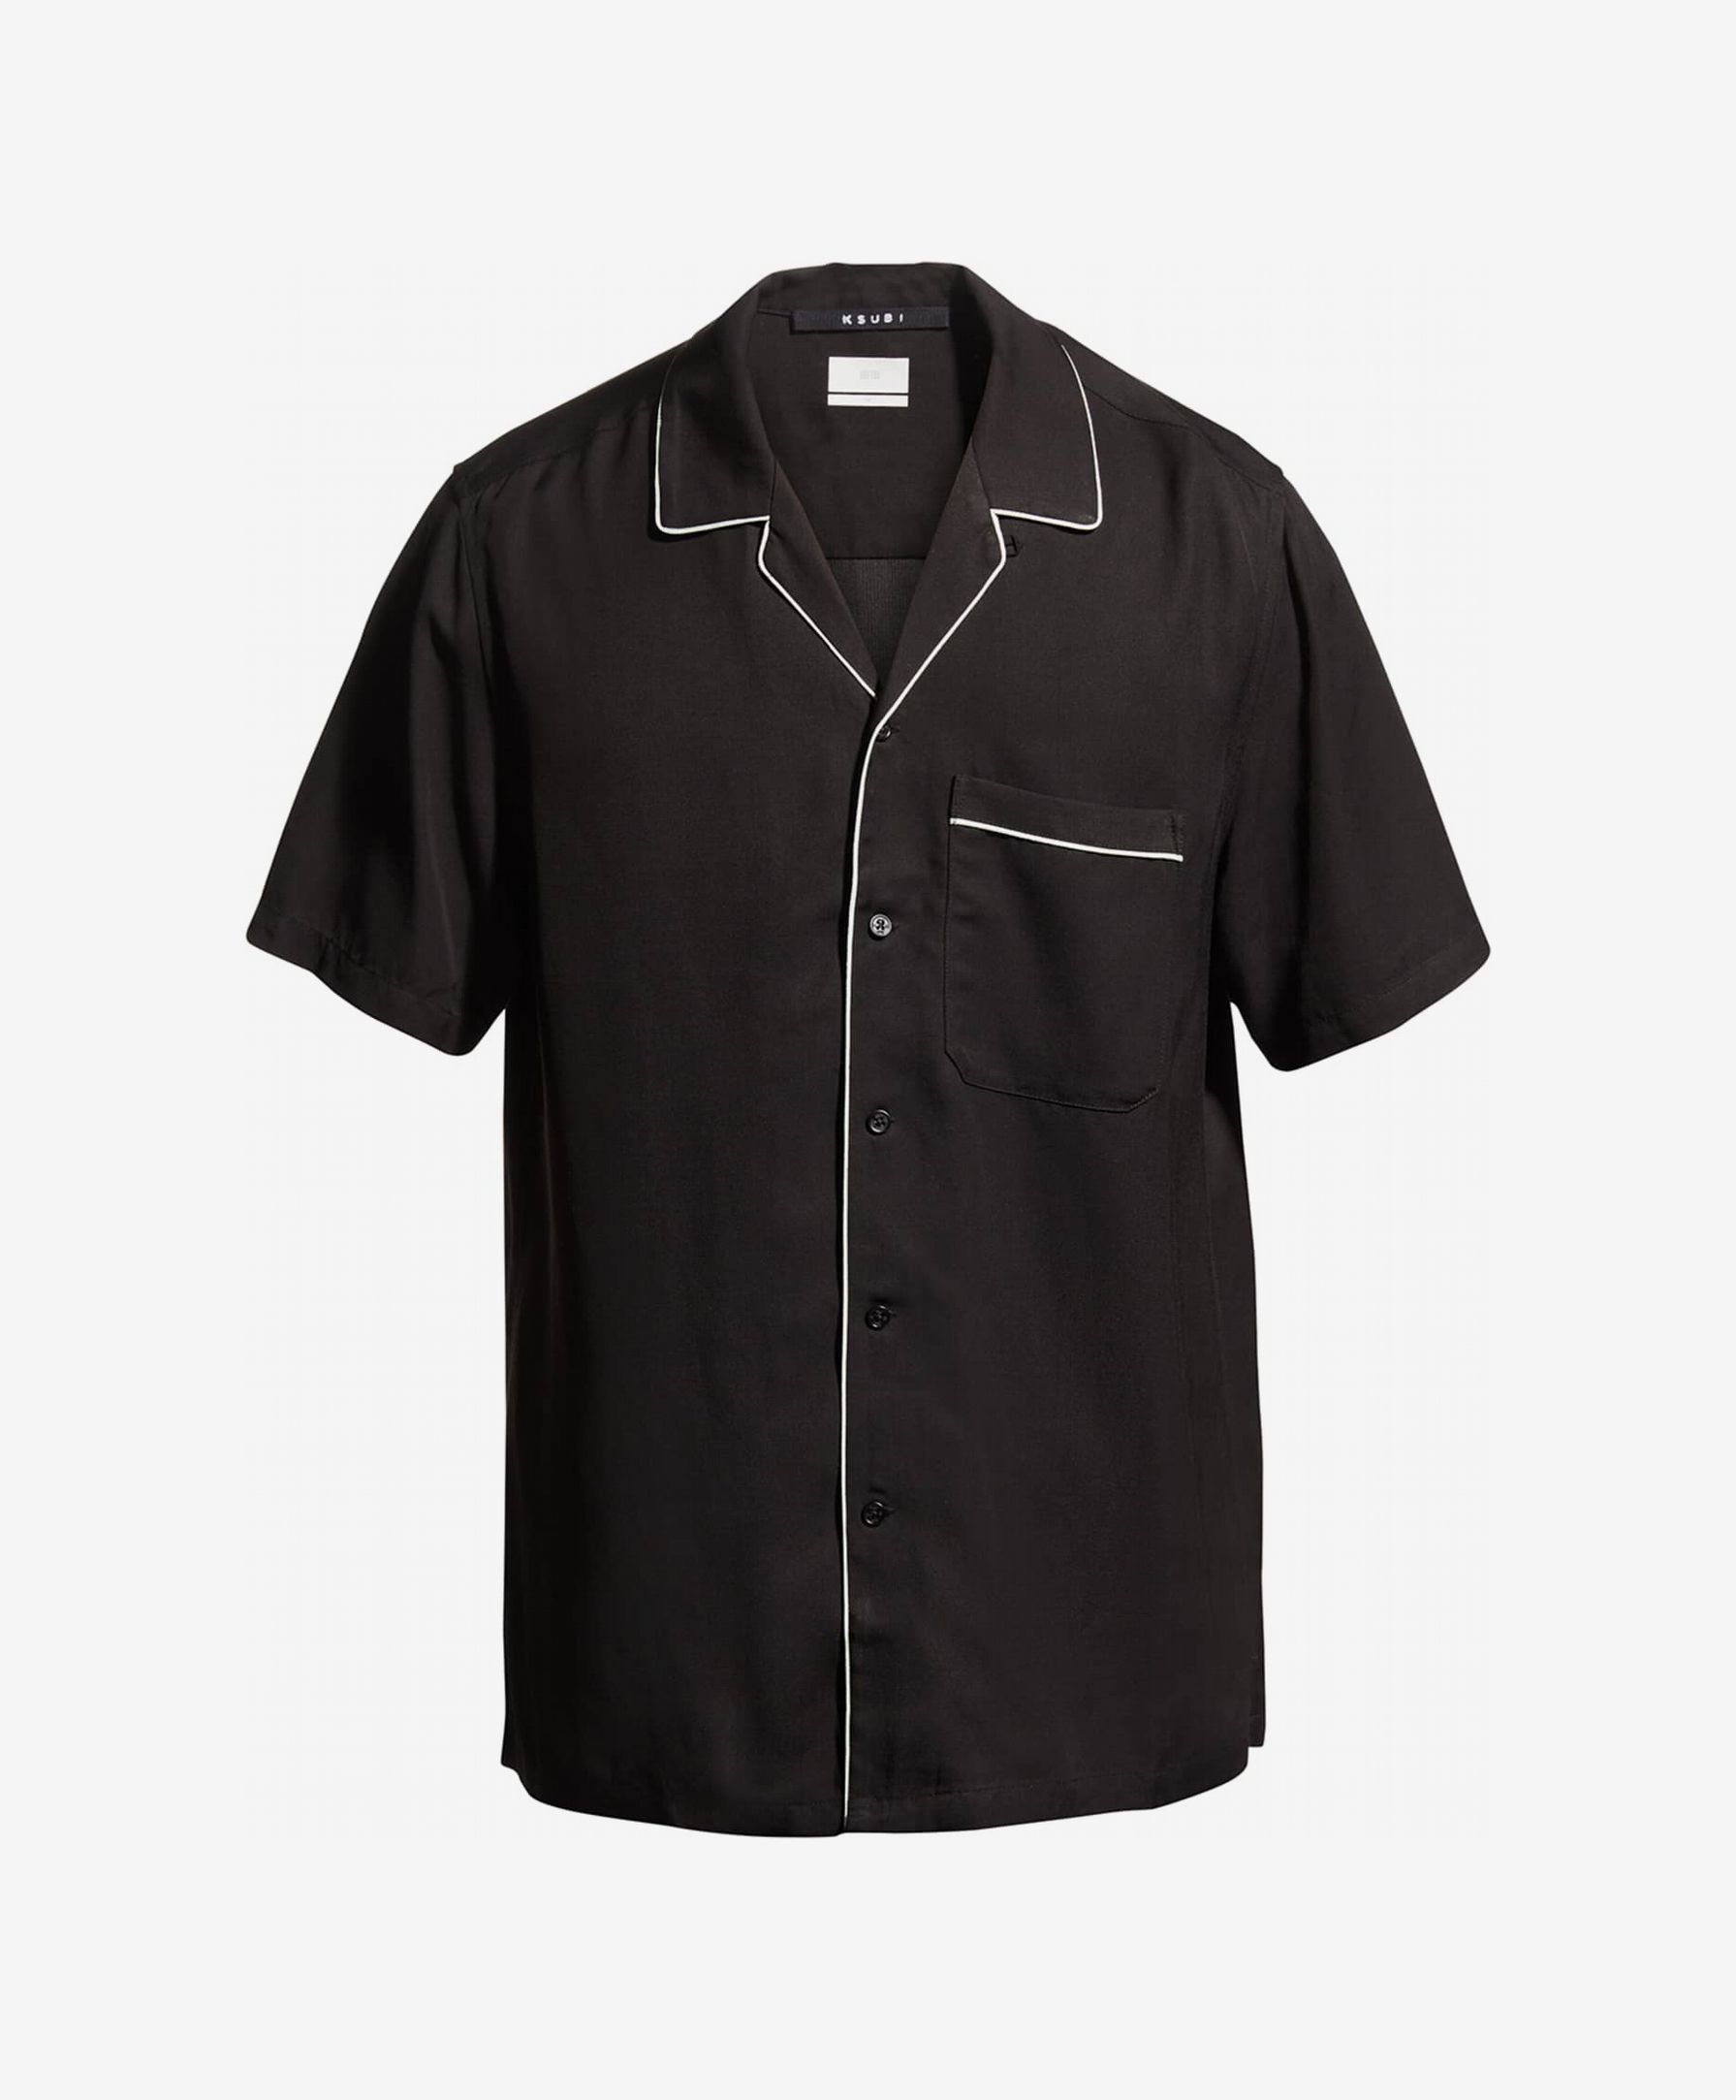 Short-Sleeve Button-Down Shirts 2021 ...